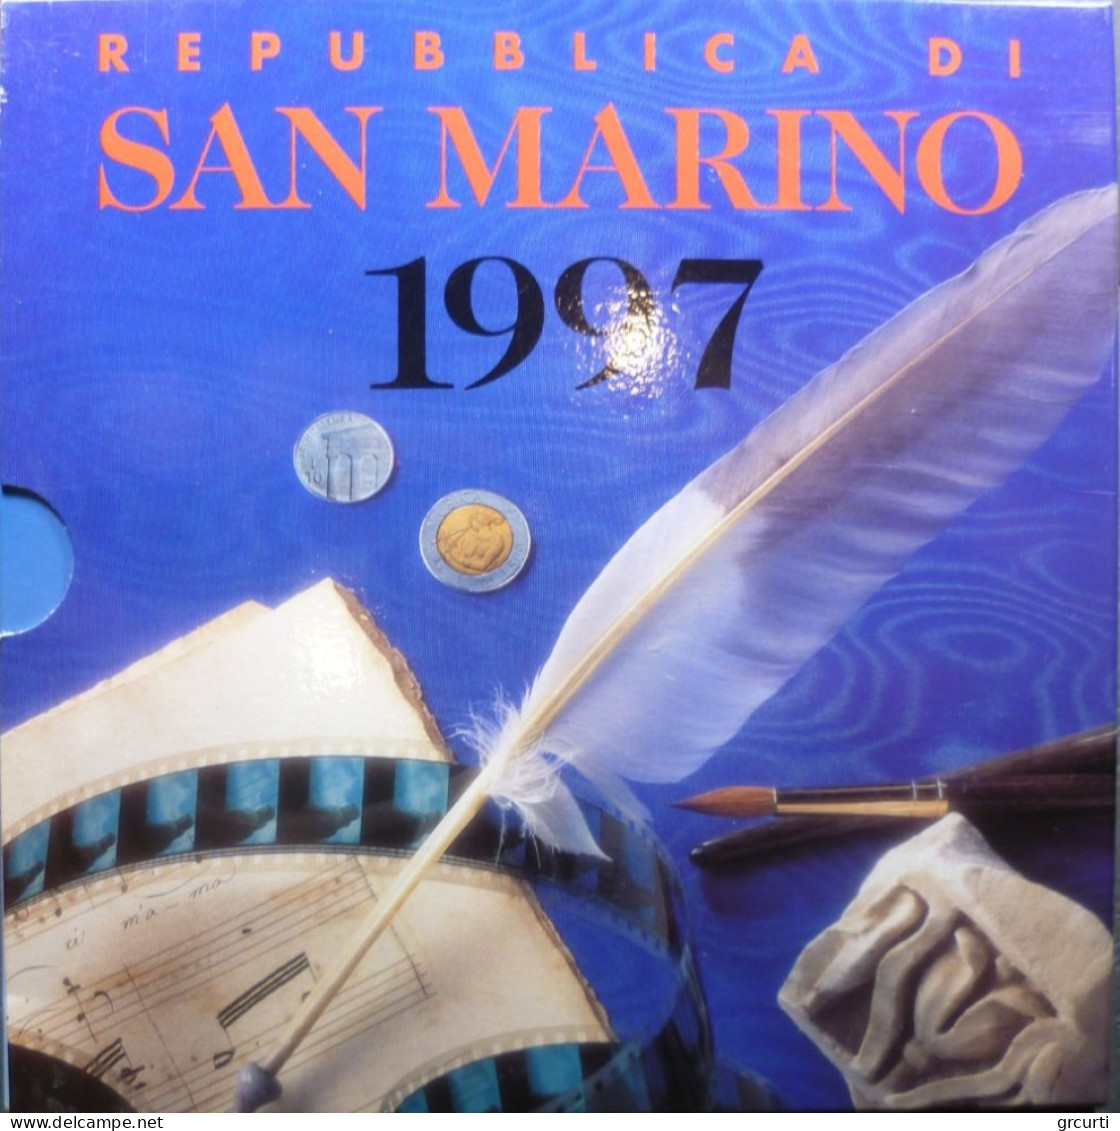 San Marino - 1997 - Serie Divisionale - Gig. 255 - San Marino